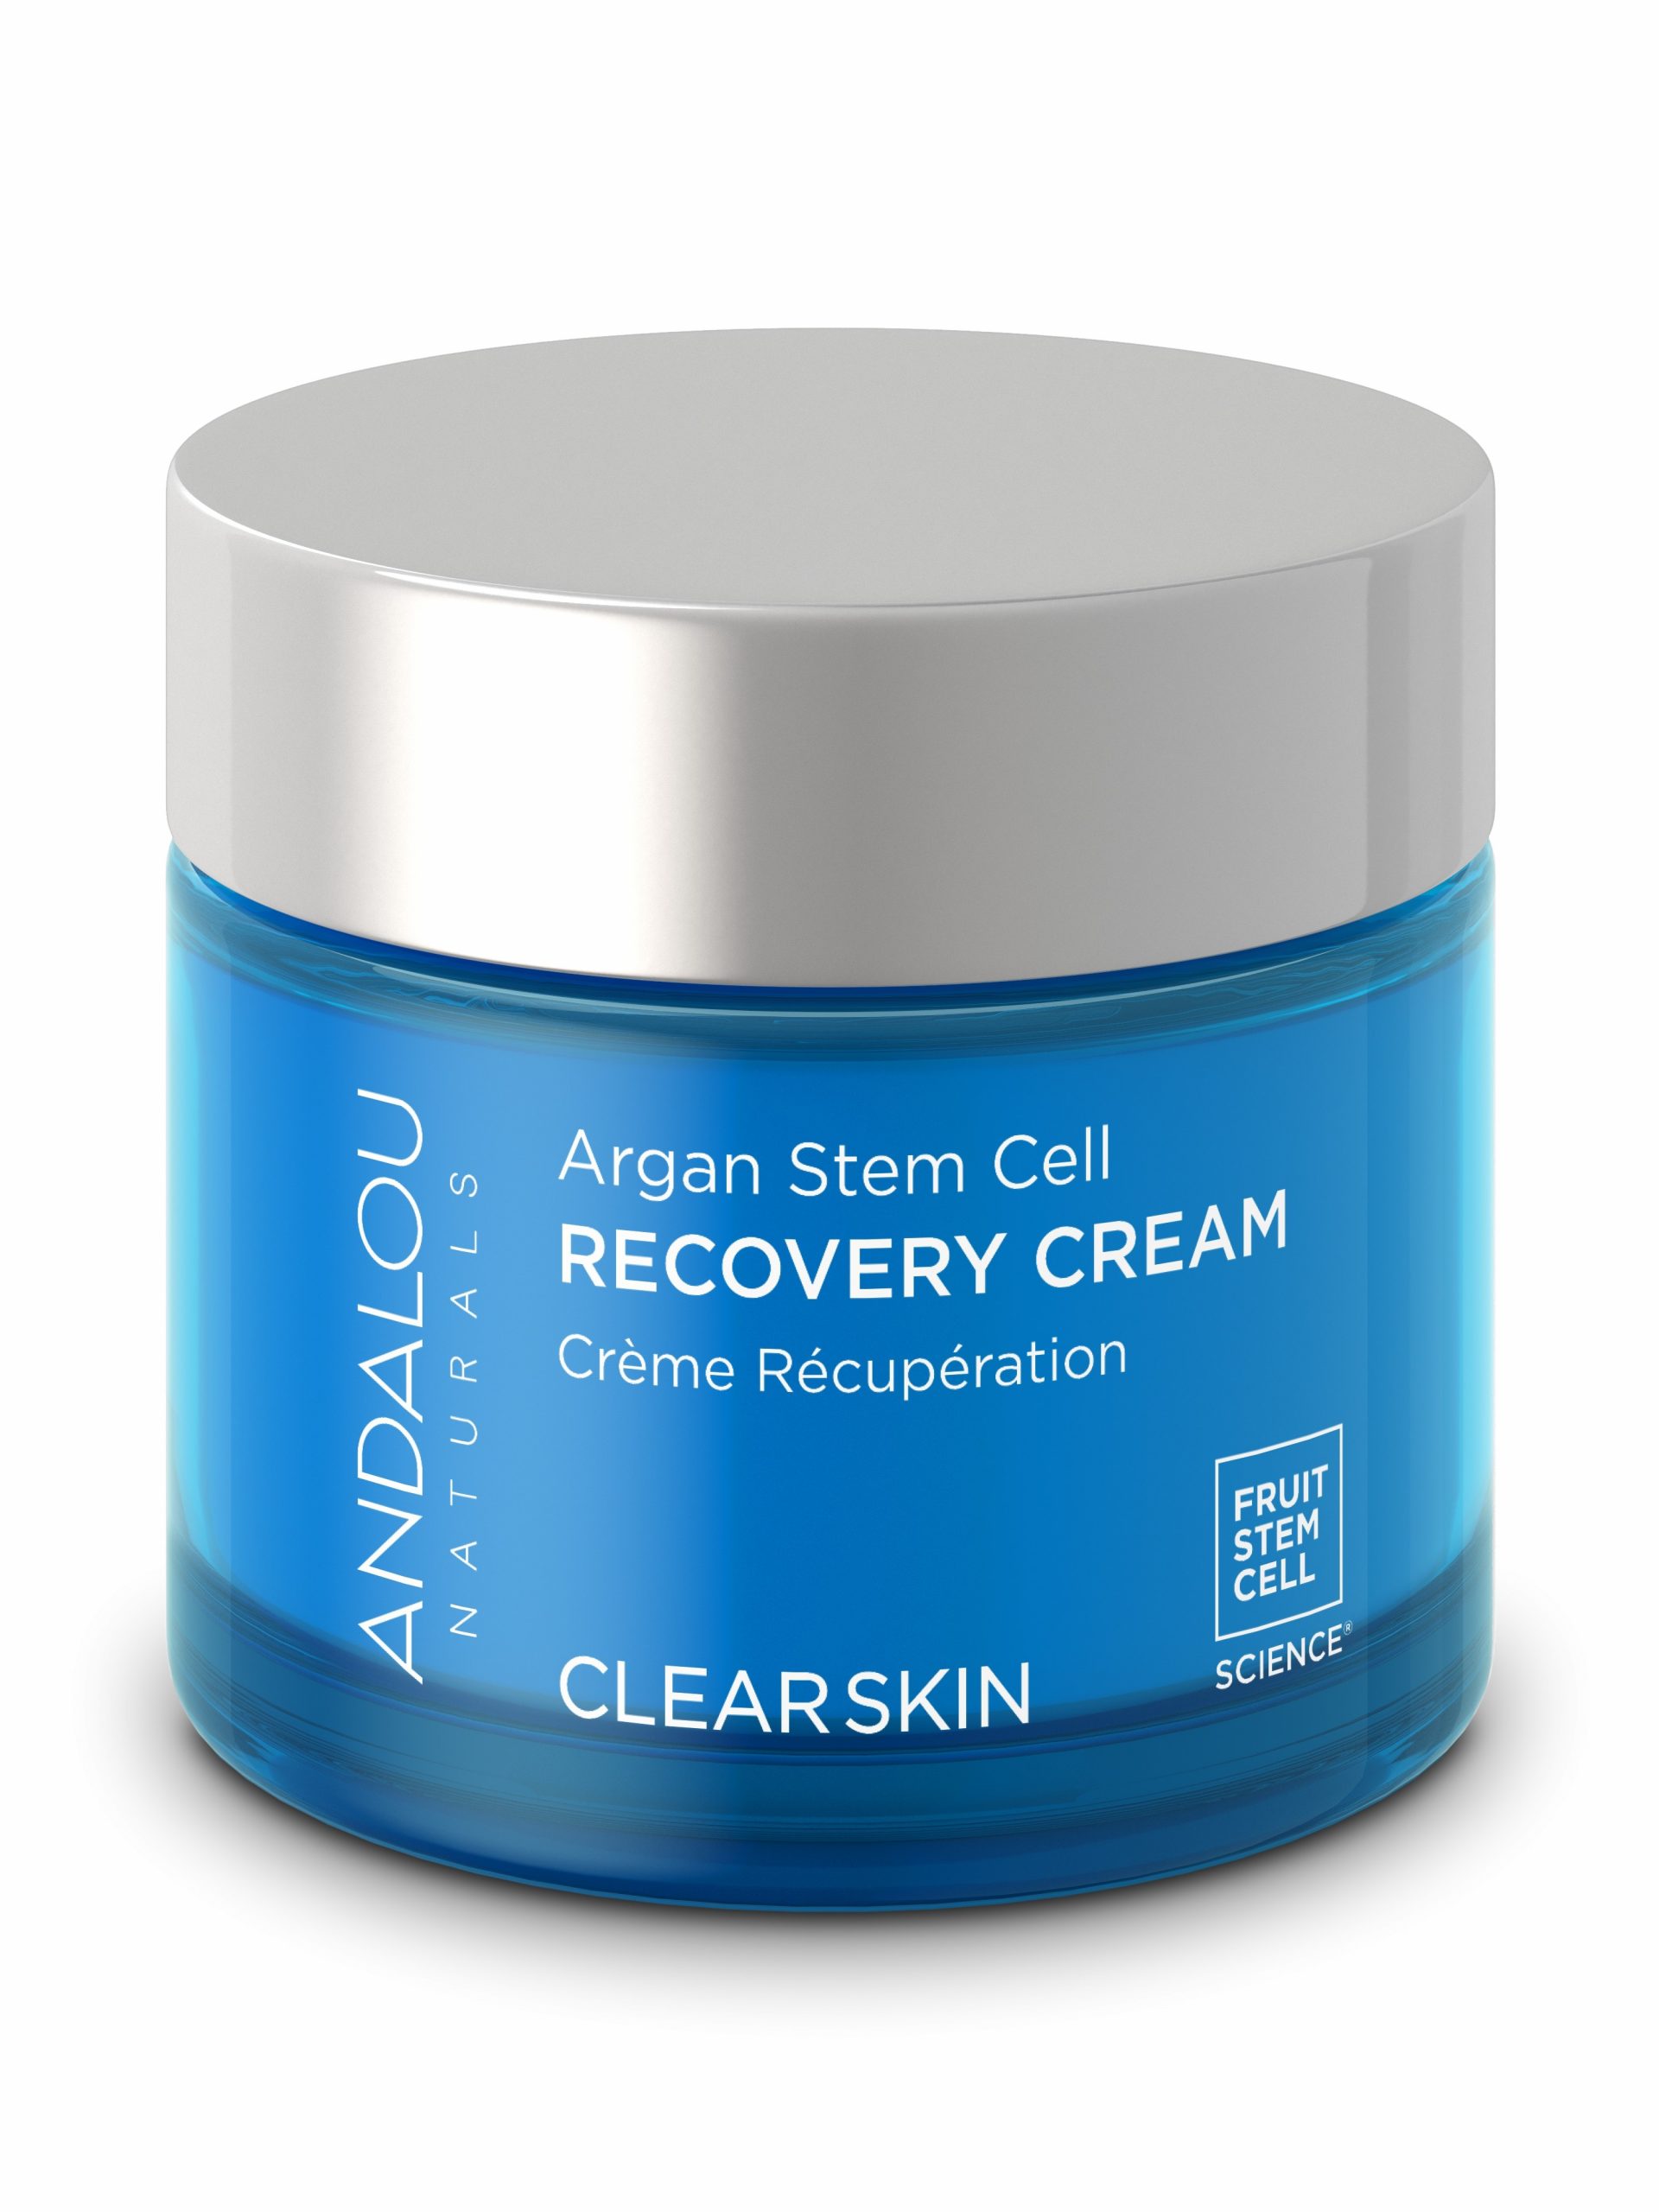 Argan stem cell recovery cream